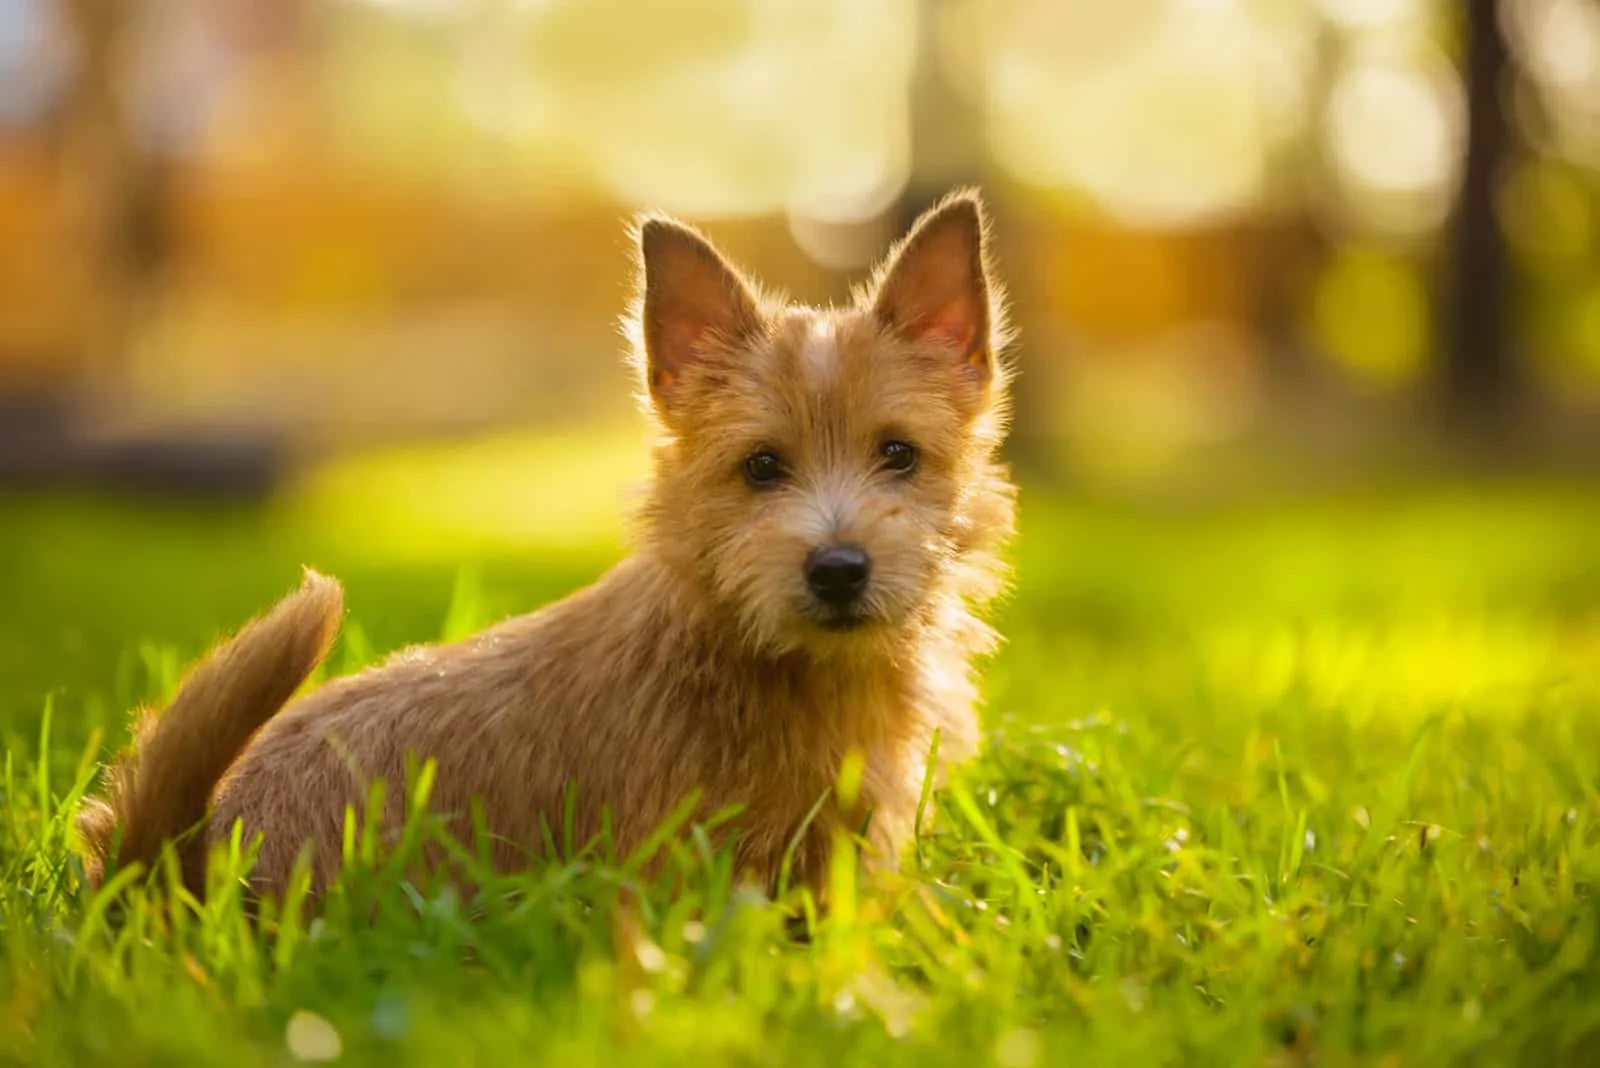 Norwich Terrier standing on grass